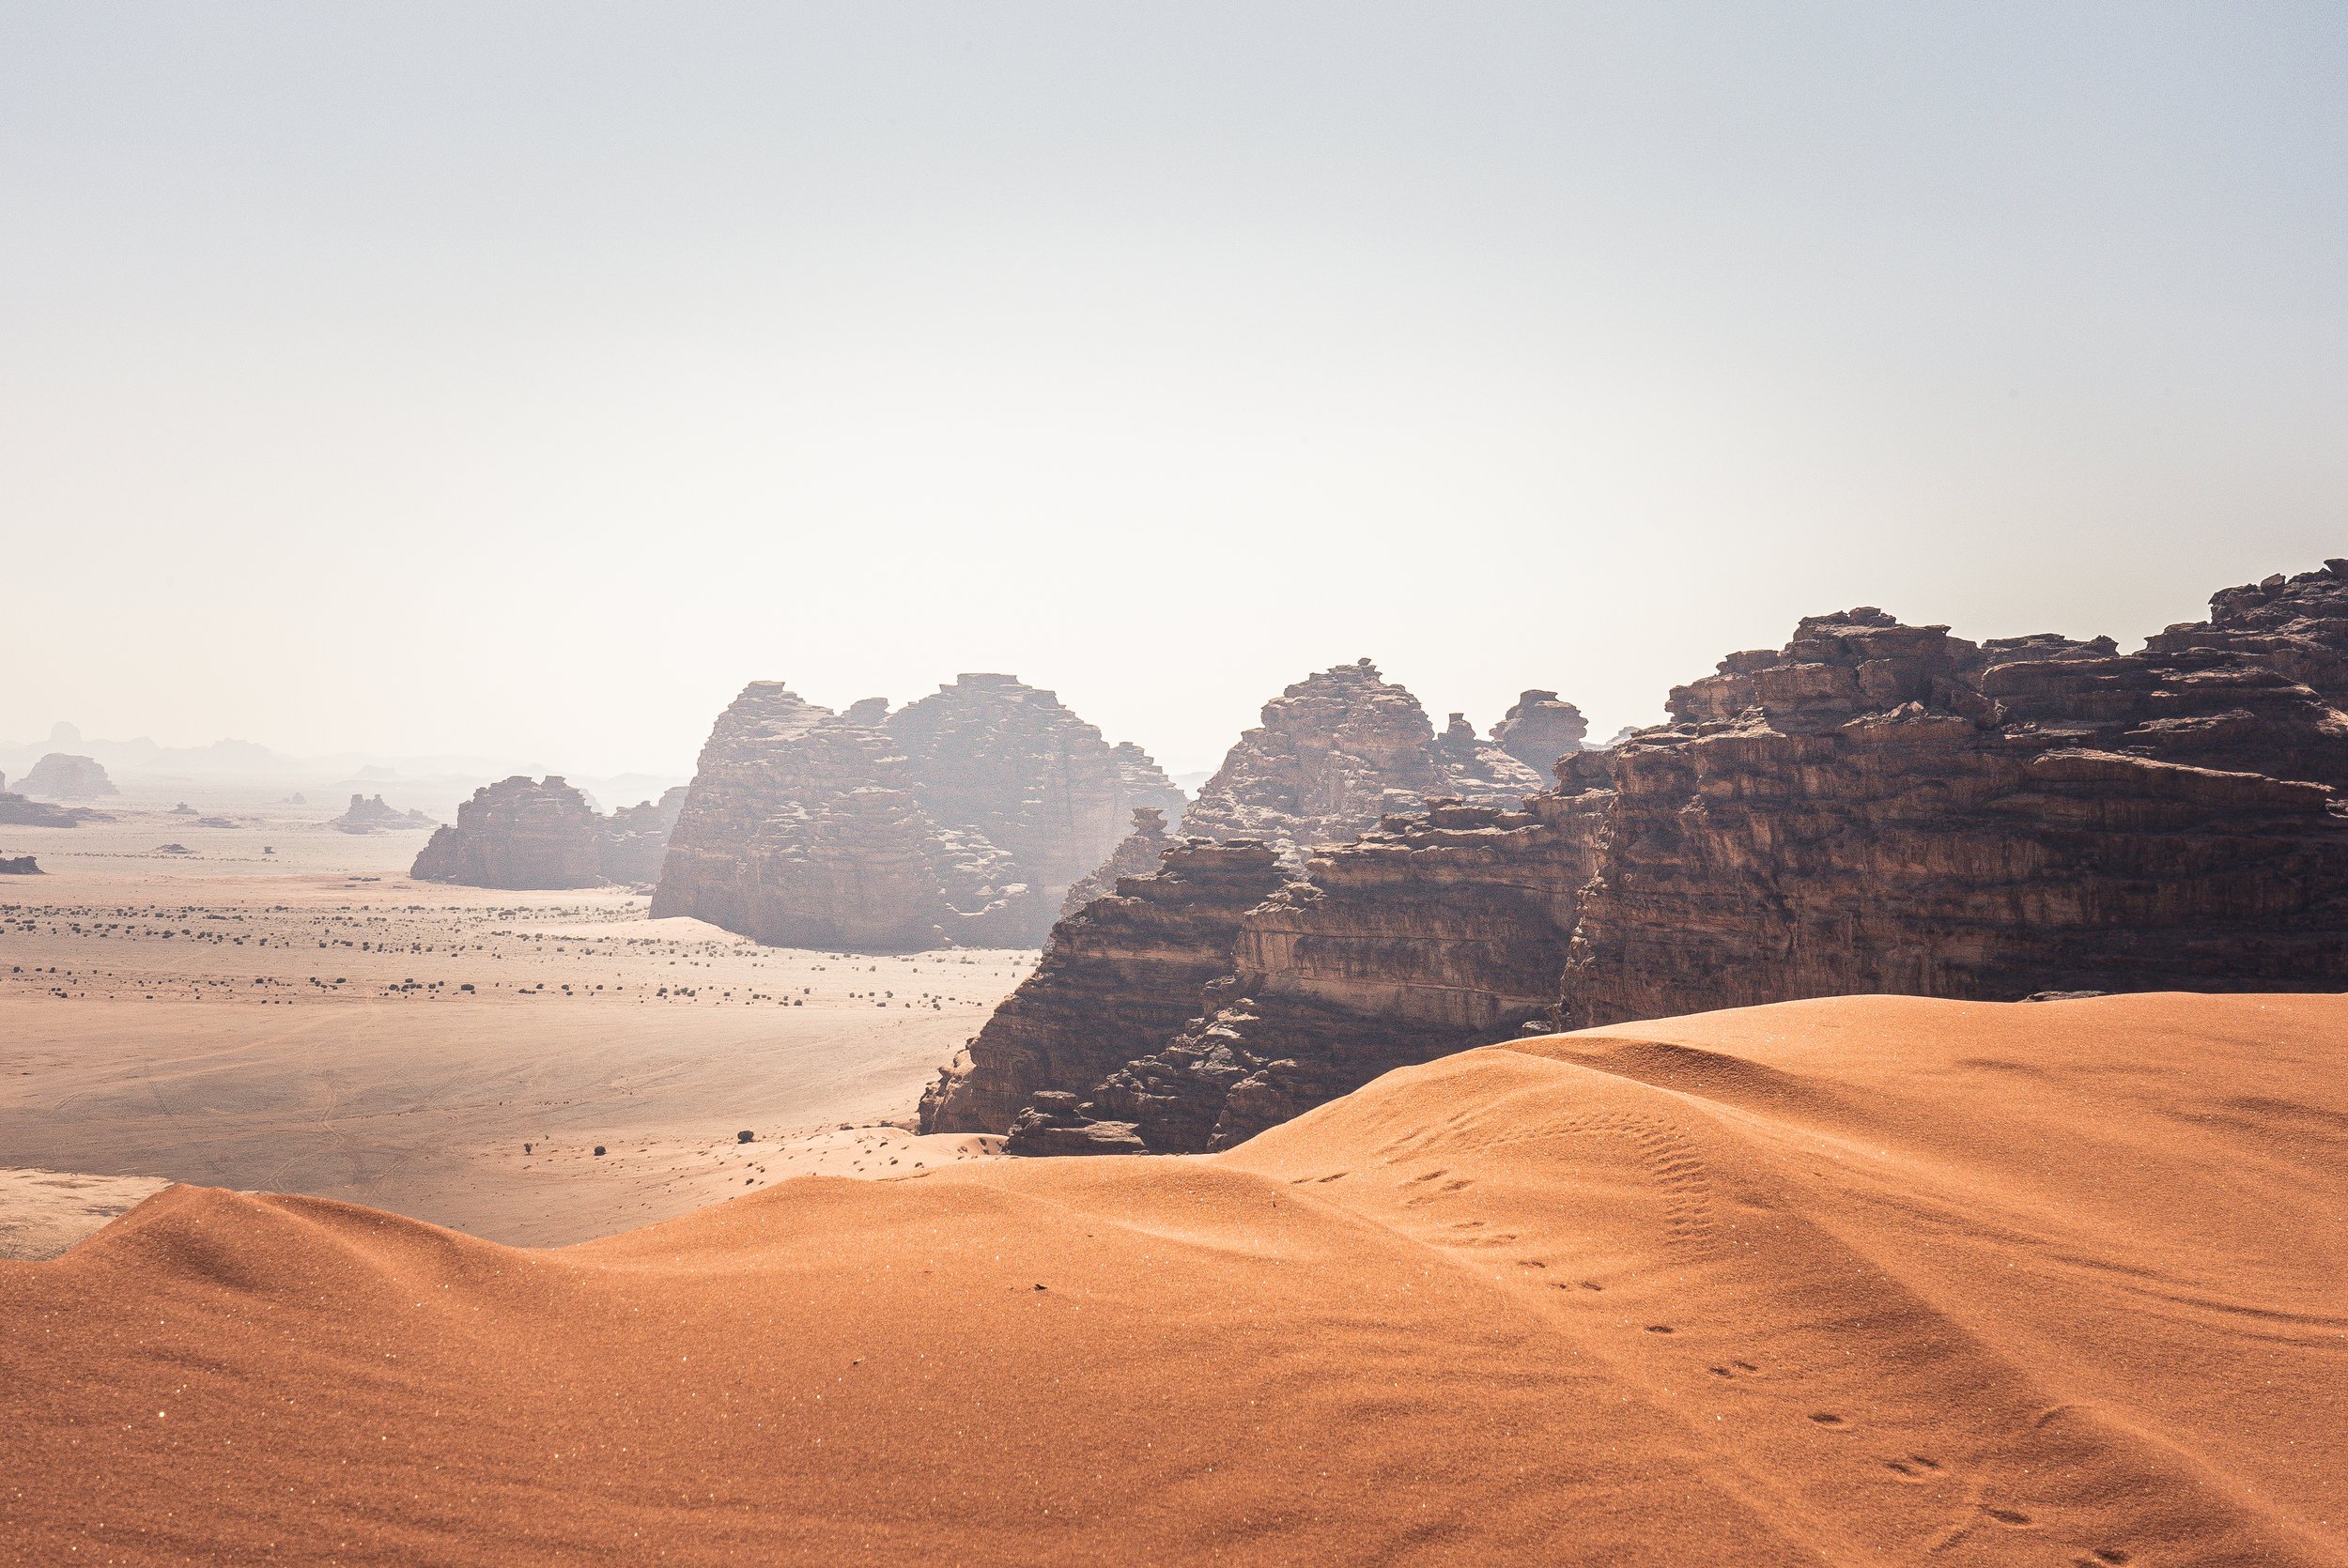 Saudi dunes 2.jpg